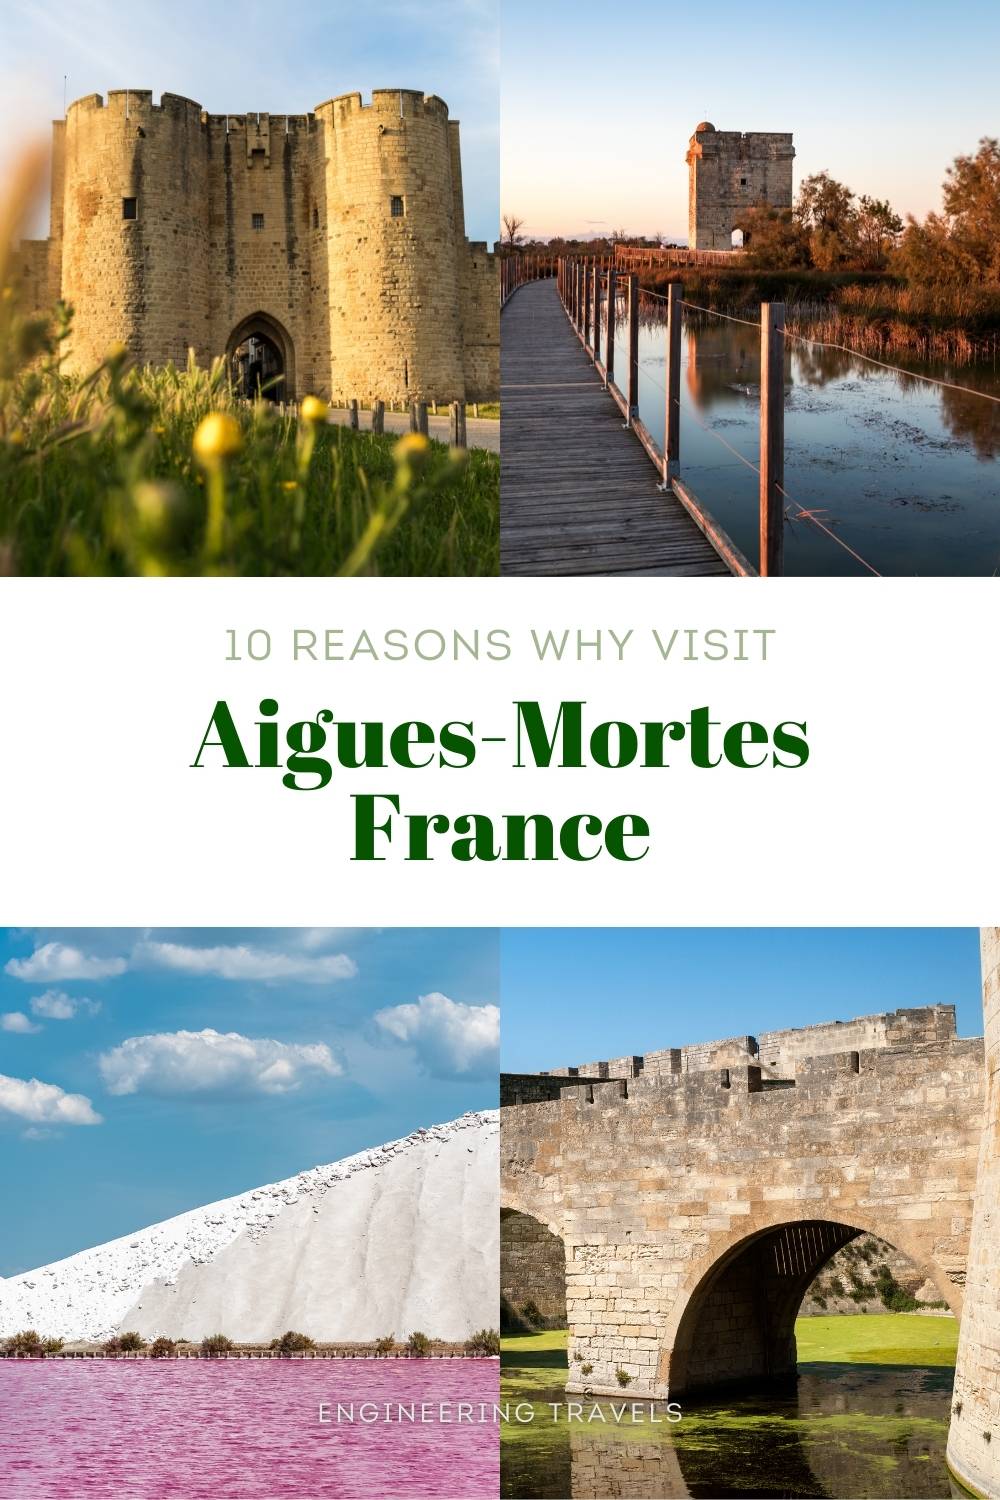 Why You Should Visit Aigues-Mortes: 10 Amazing Experiences